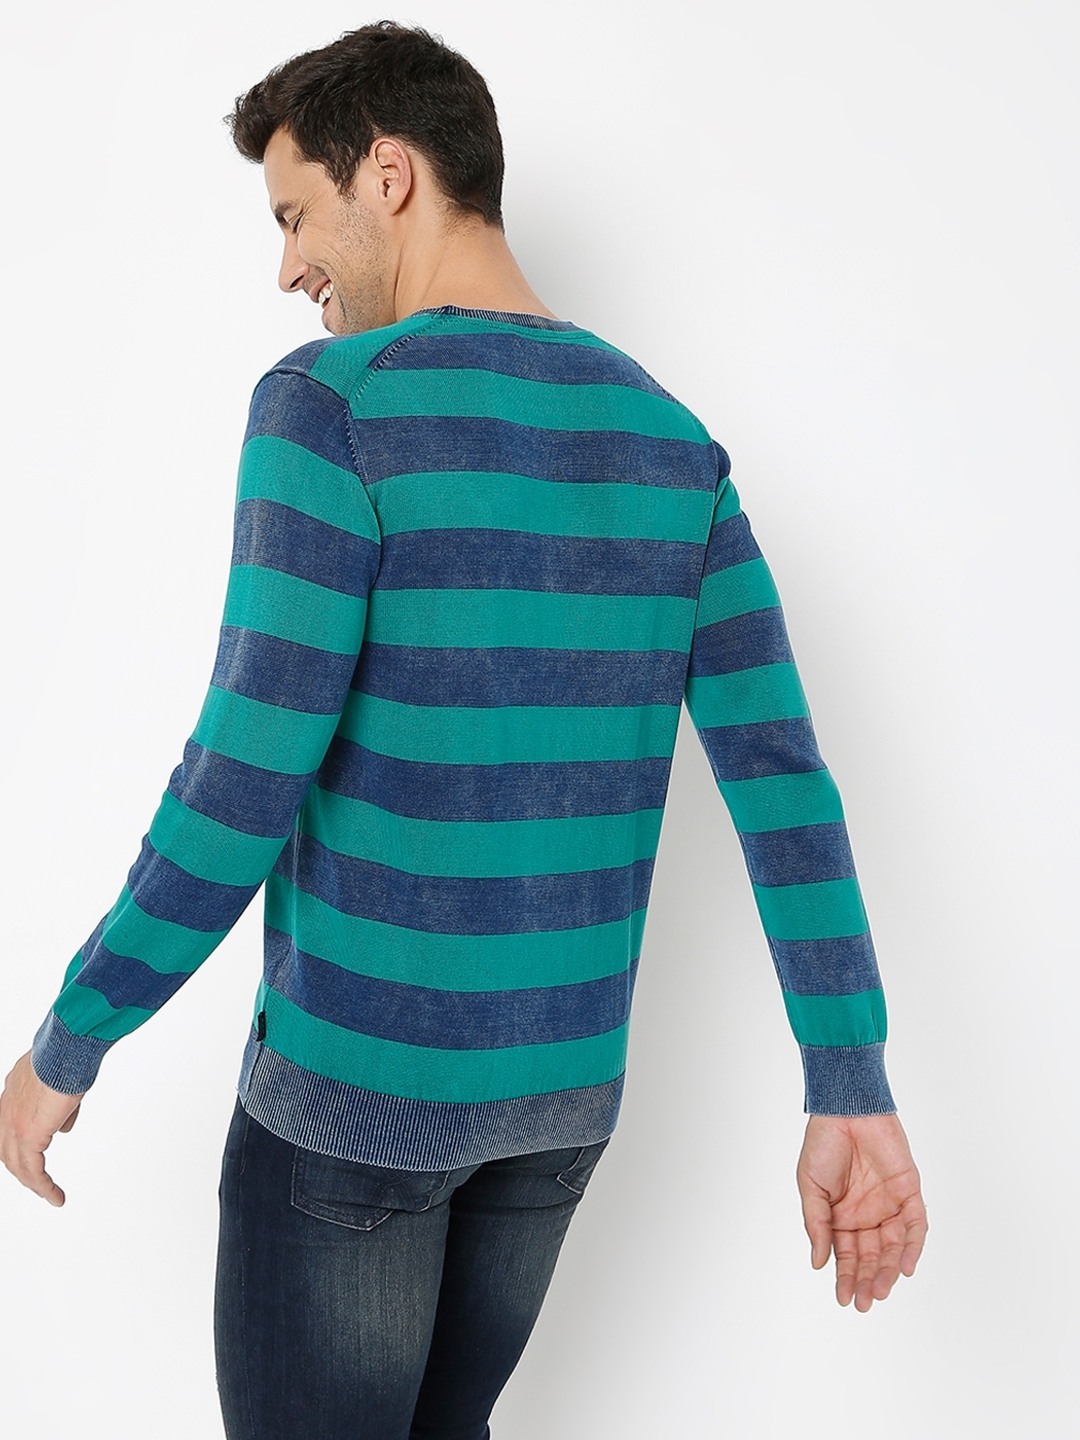 Waldo Knitted Slim Fit Sweater